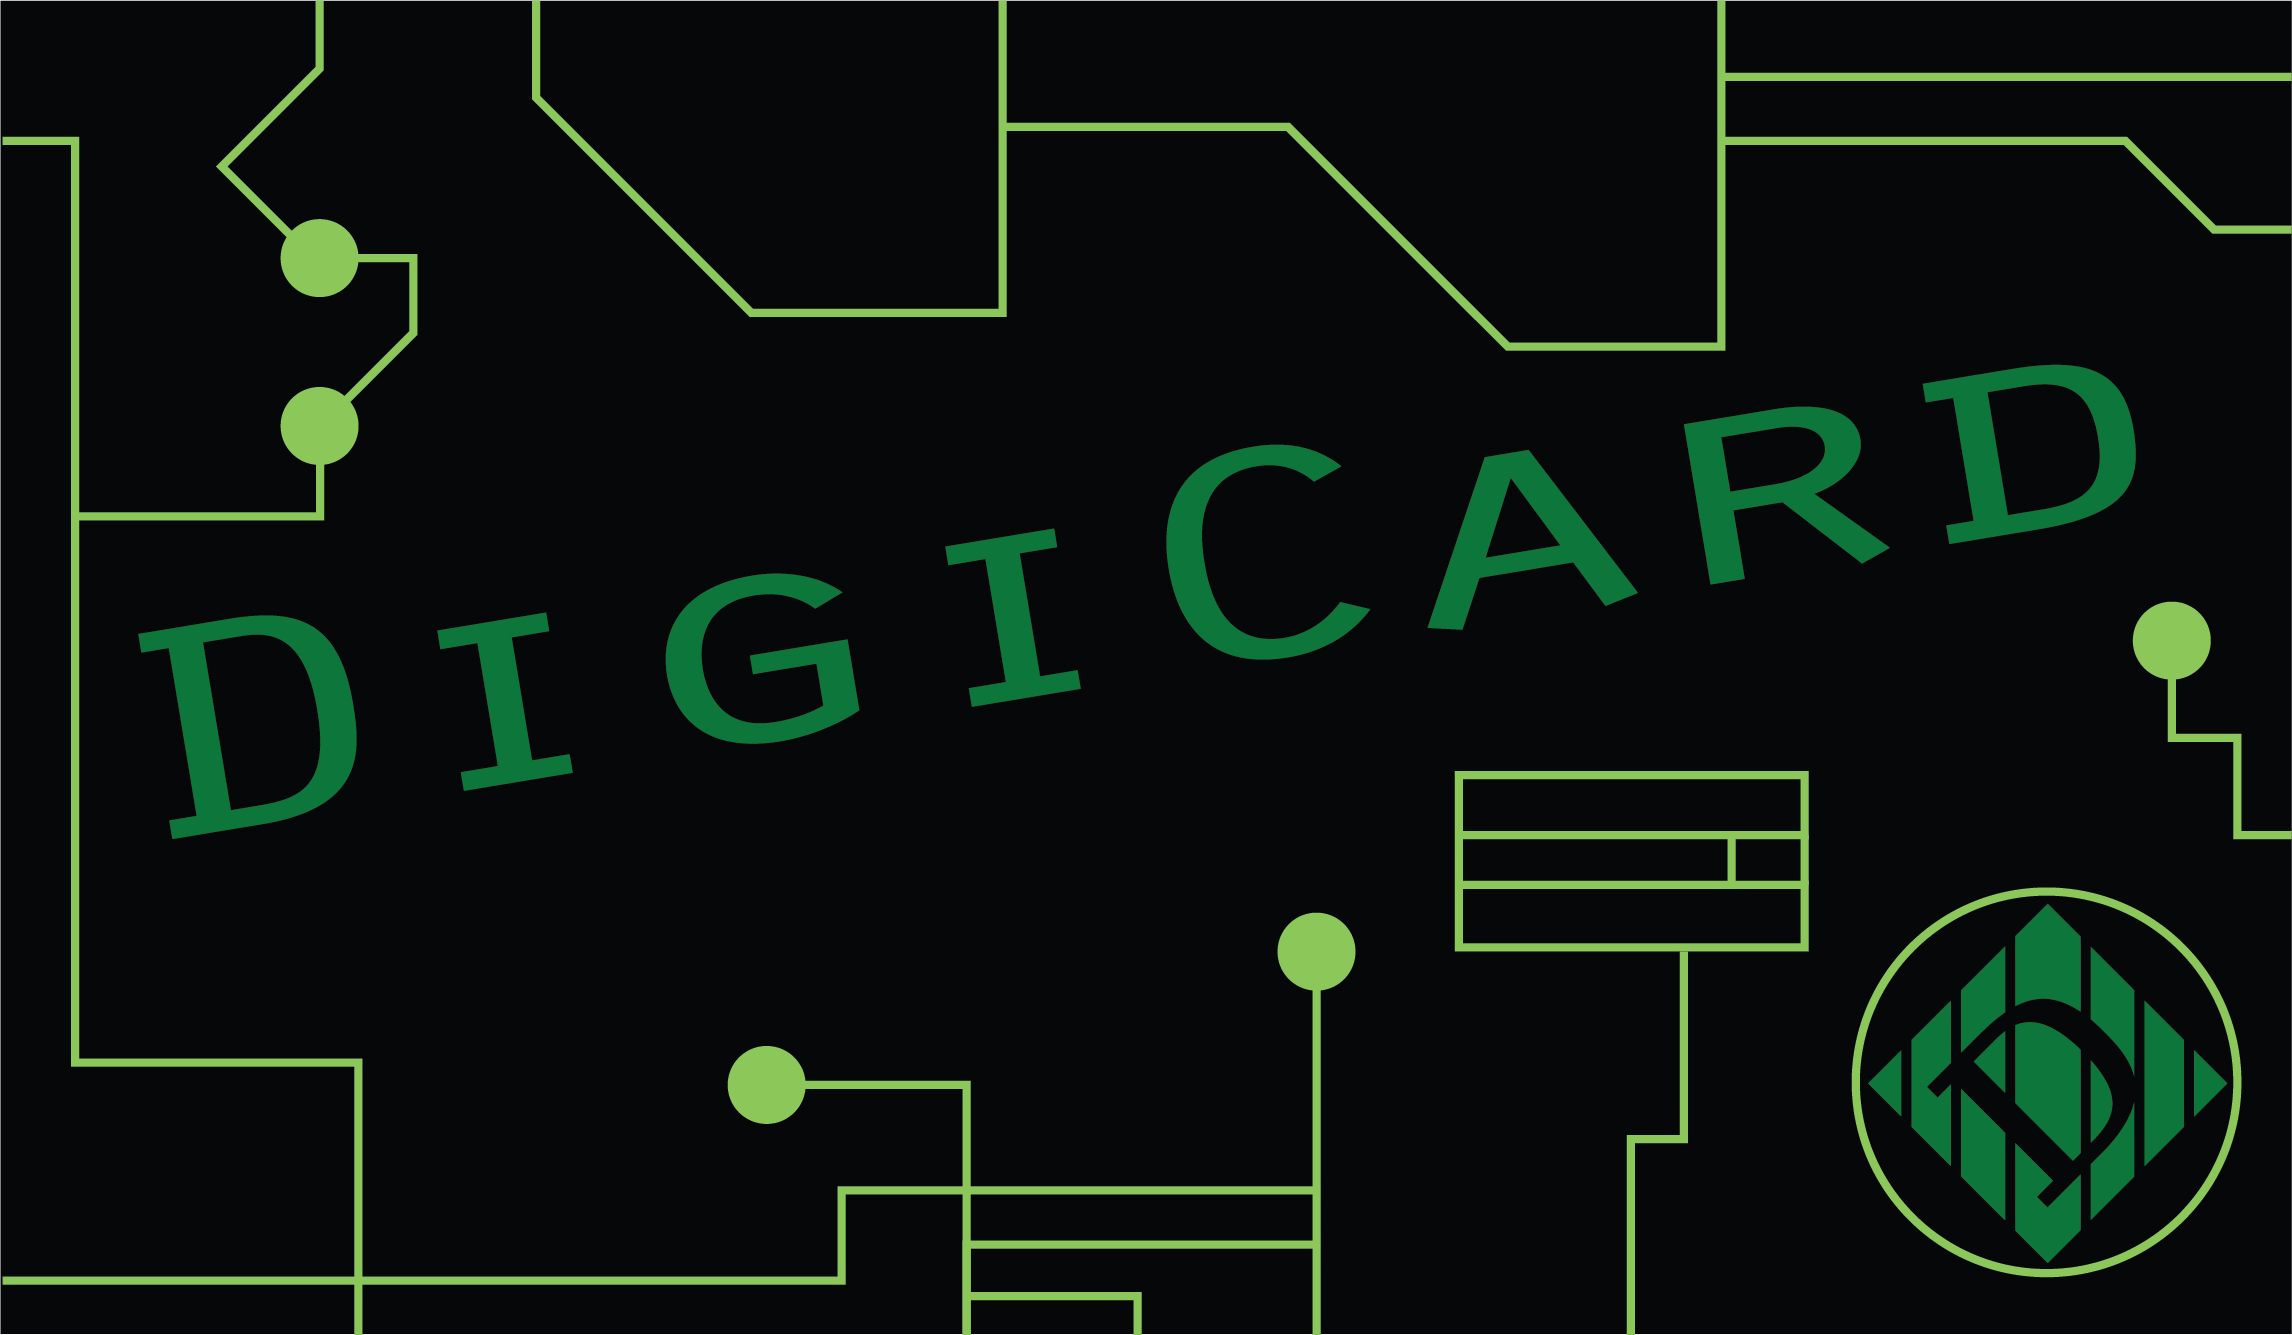 Basic DigiCard